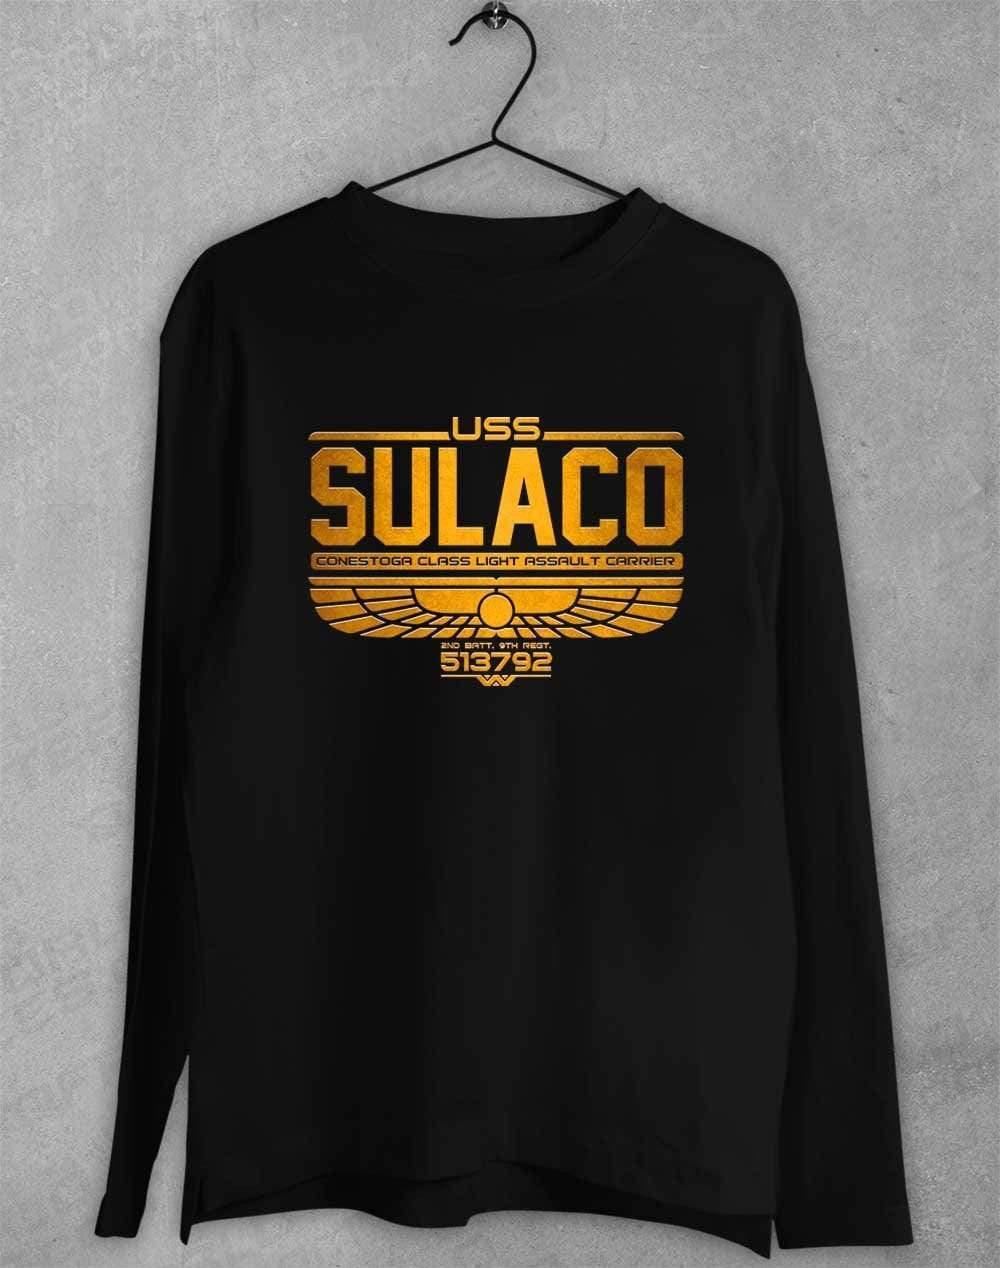 USS Sulaco Long Sleeve T-Shirt S / Black  - Off World Tees